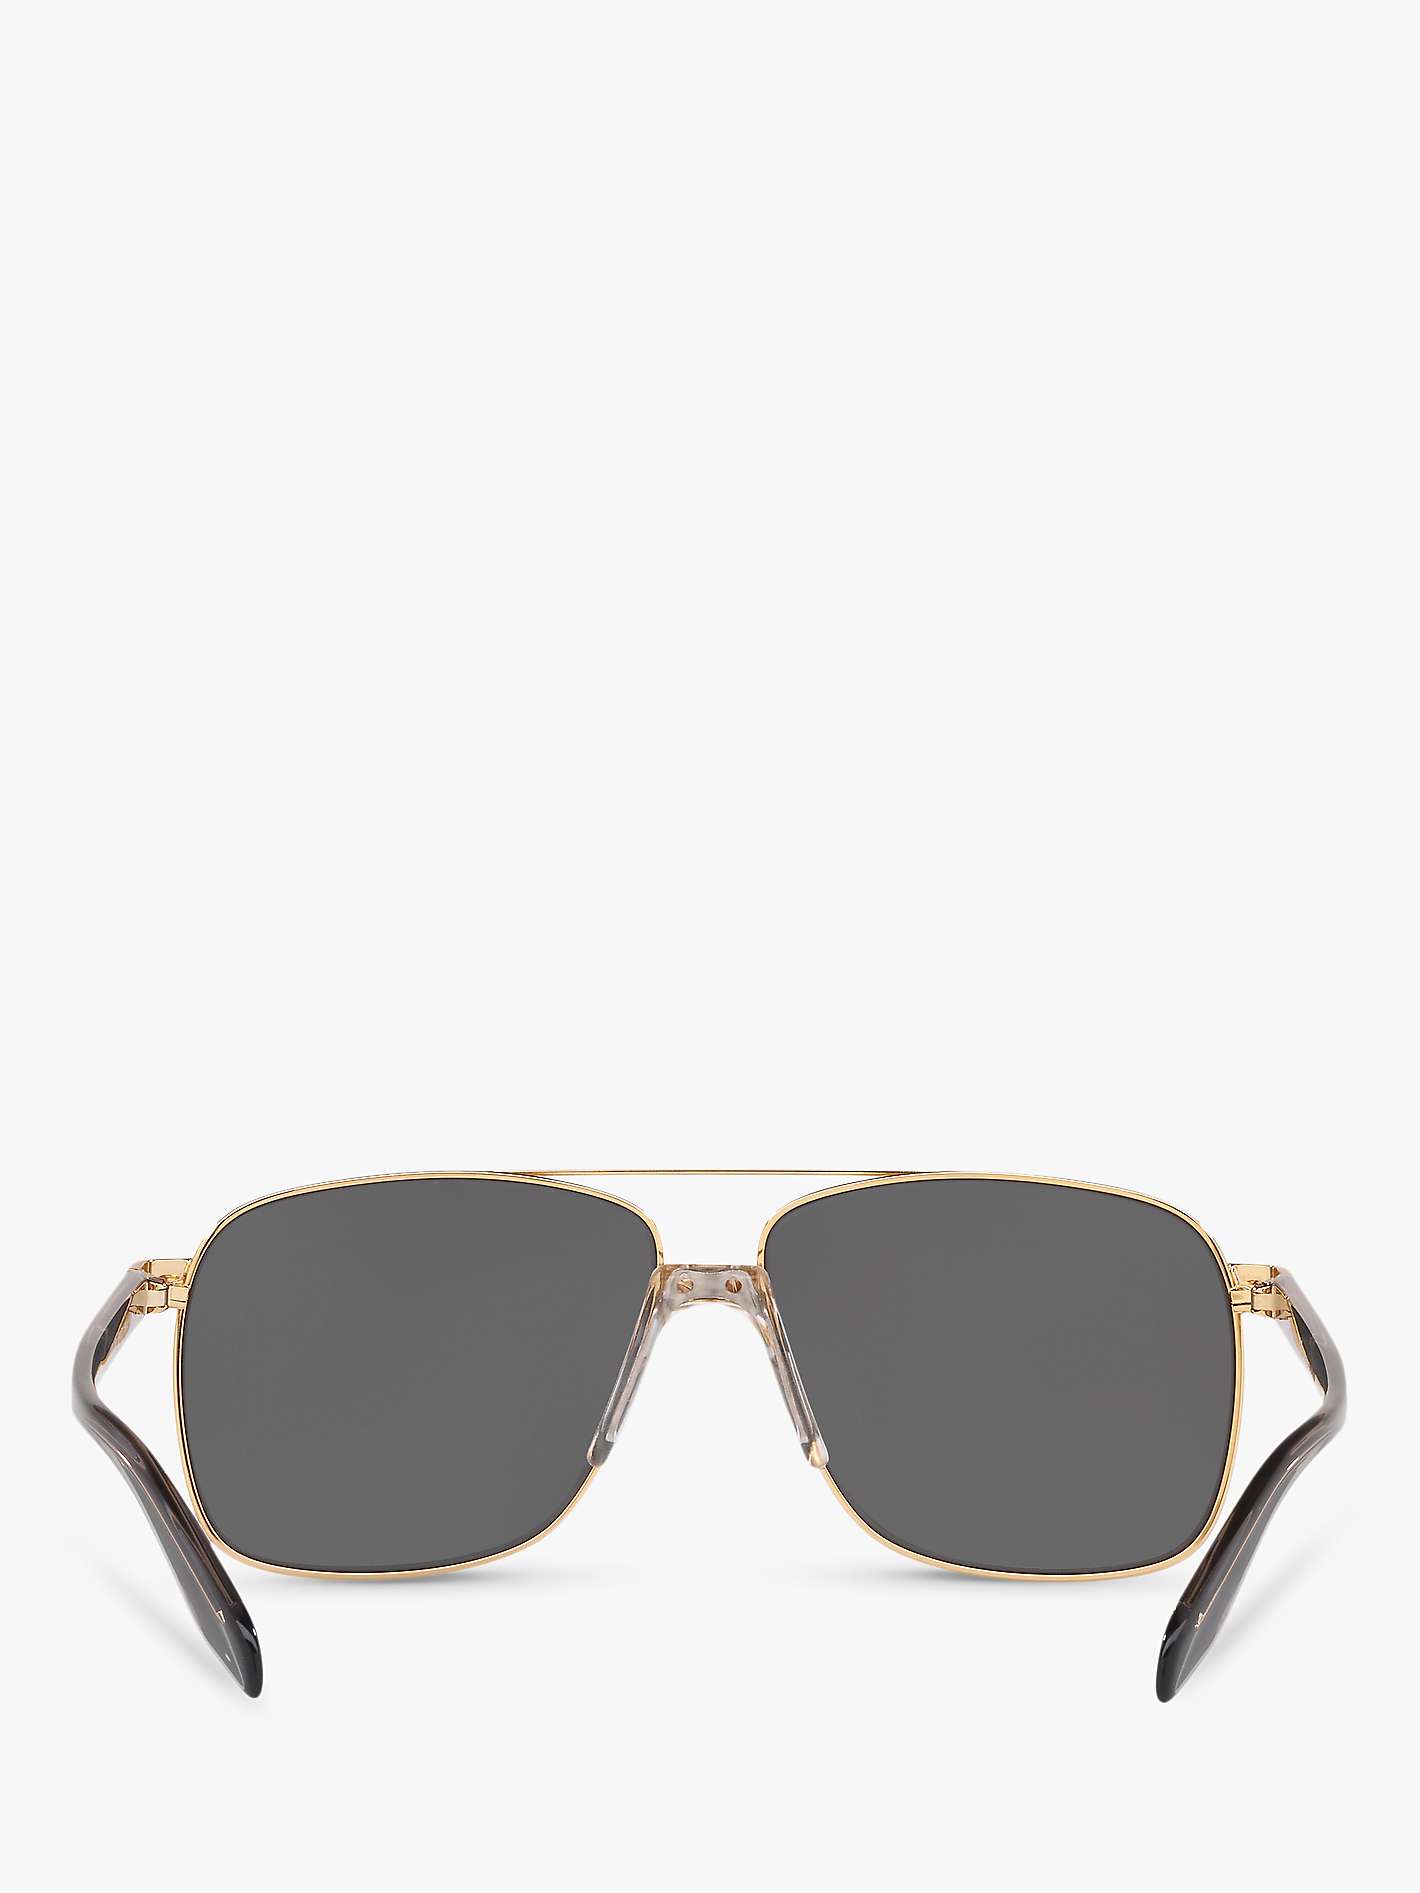 Versace VE2174 Men's Polarised Square Sunglasses, Gold/Mirror Grey at ...